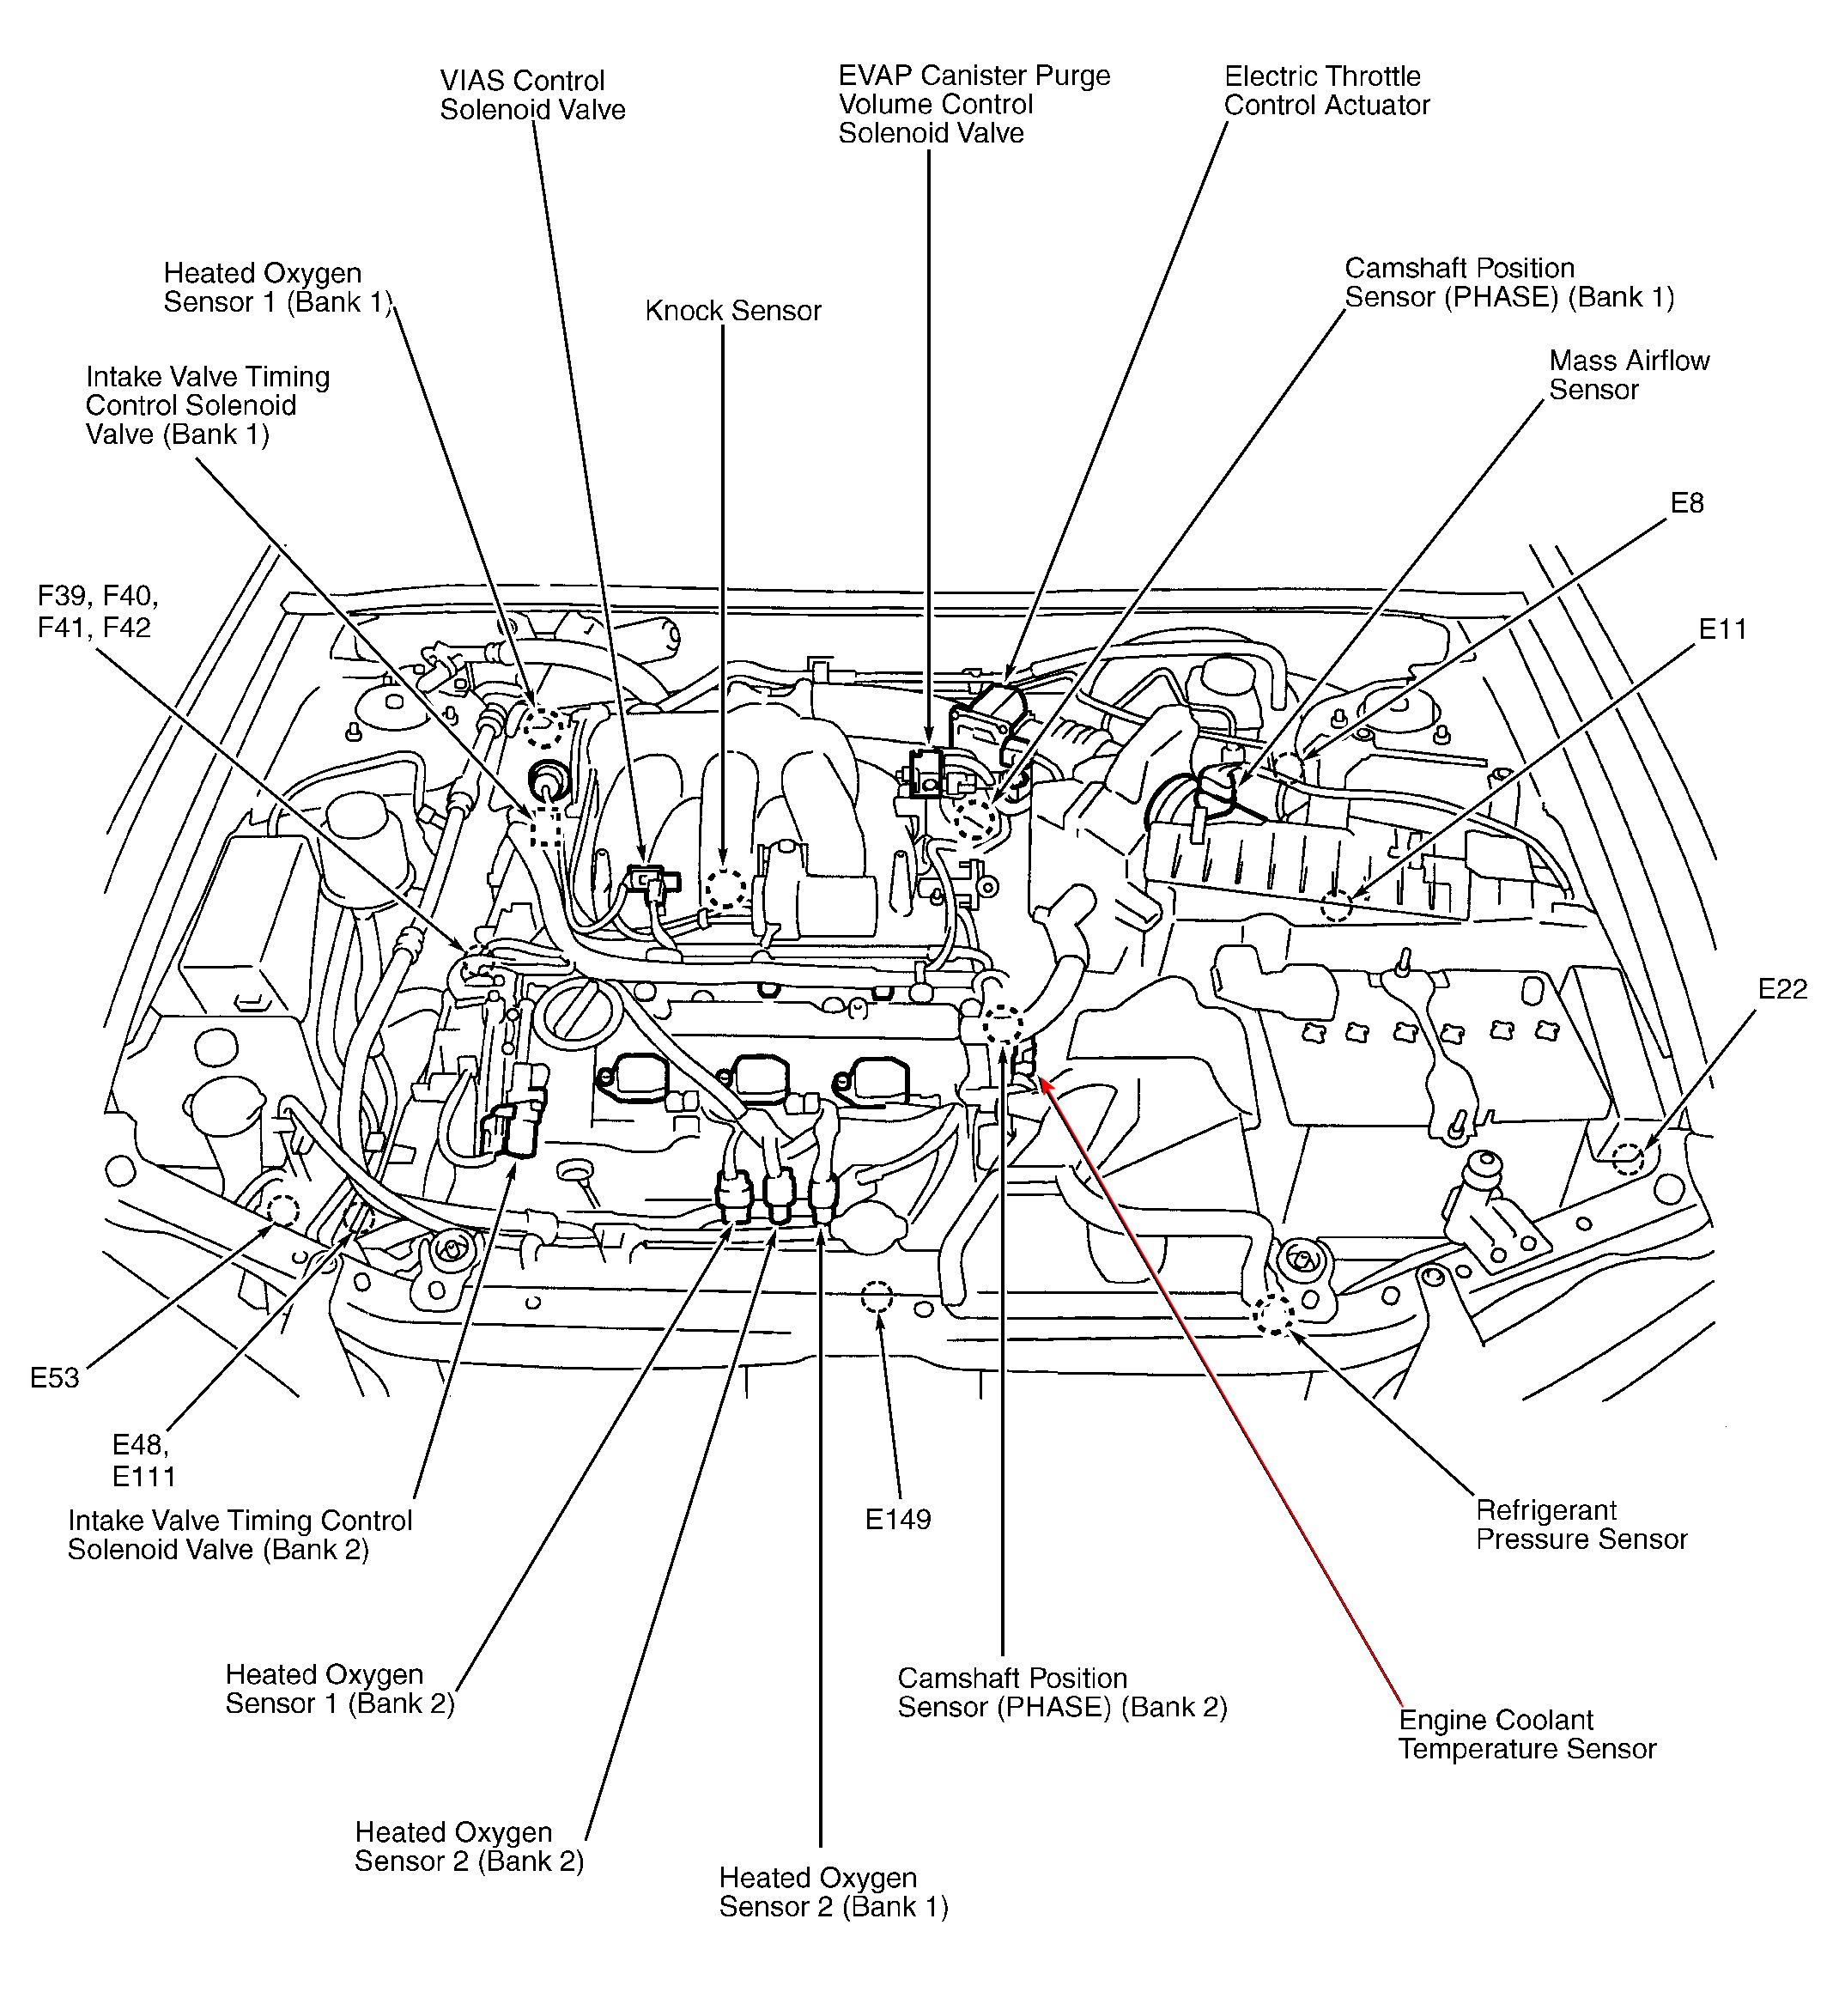 2001 Mercury Sable Engine Diagram Wiring Diagram Moreover 2001 Nissan Maxima Exhaust System Diagram Of 2001 Mercury Sable Engine Diagram